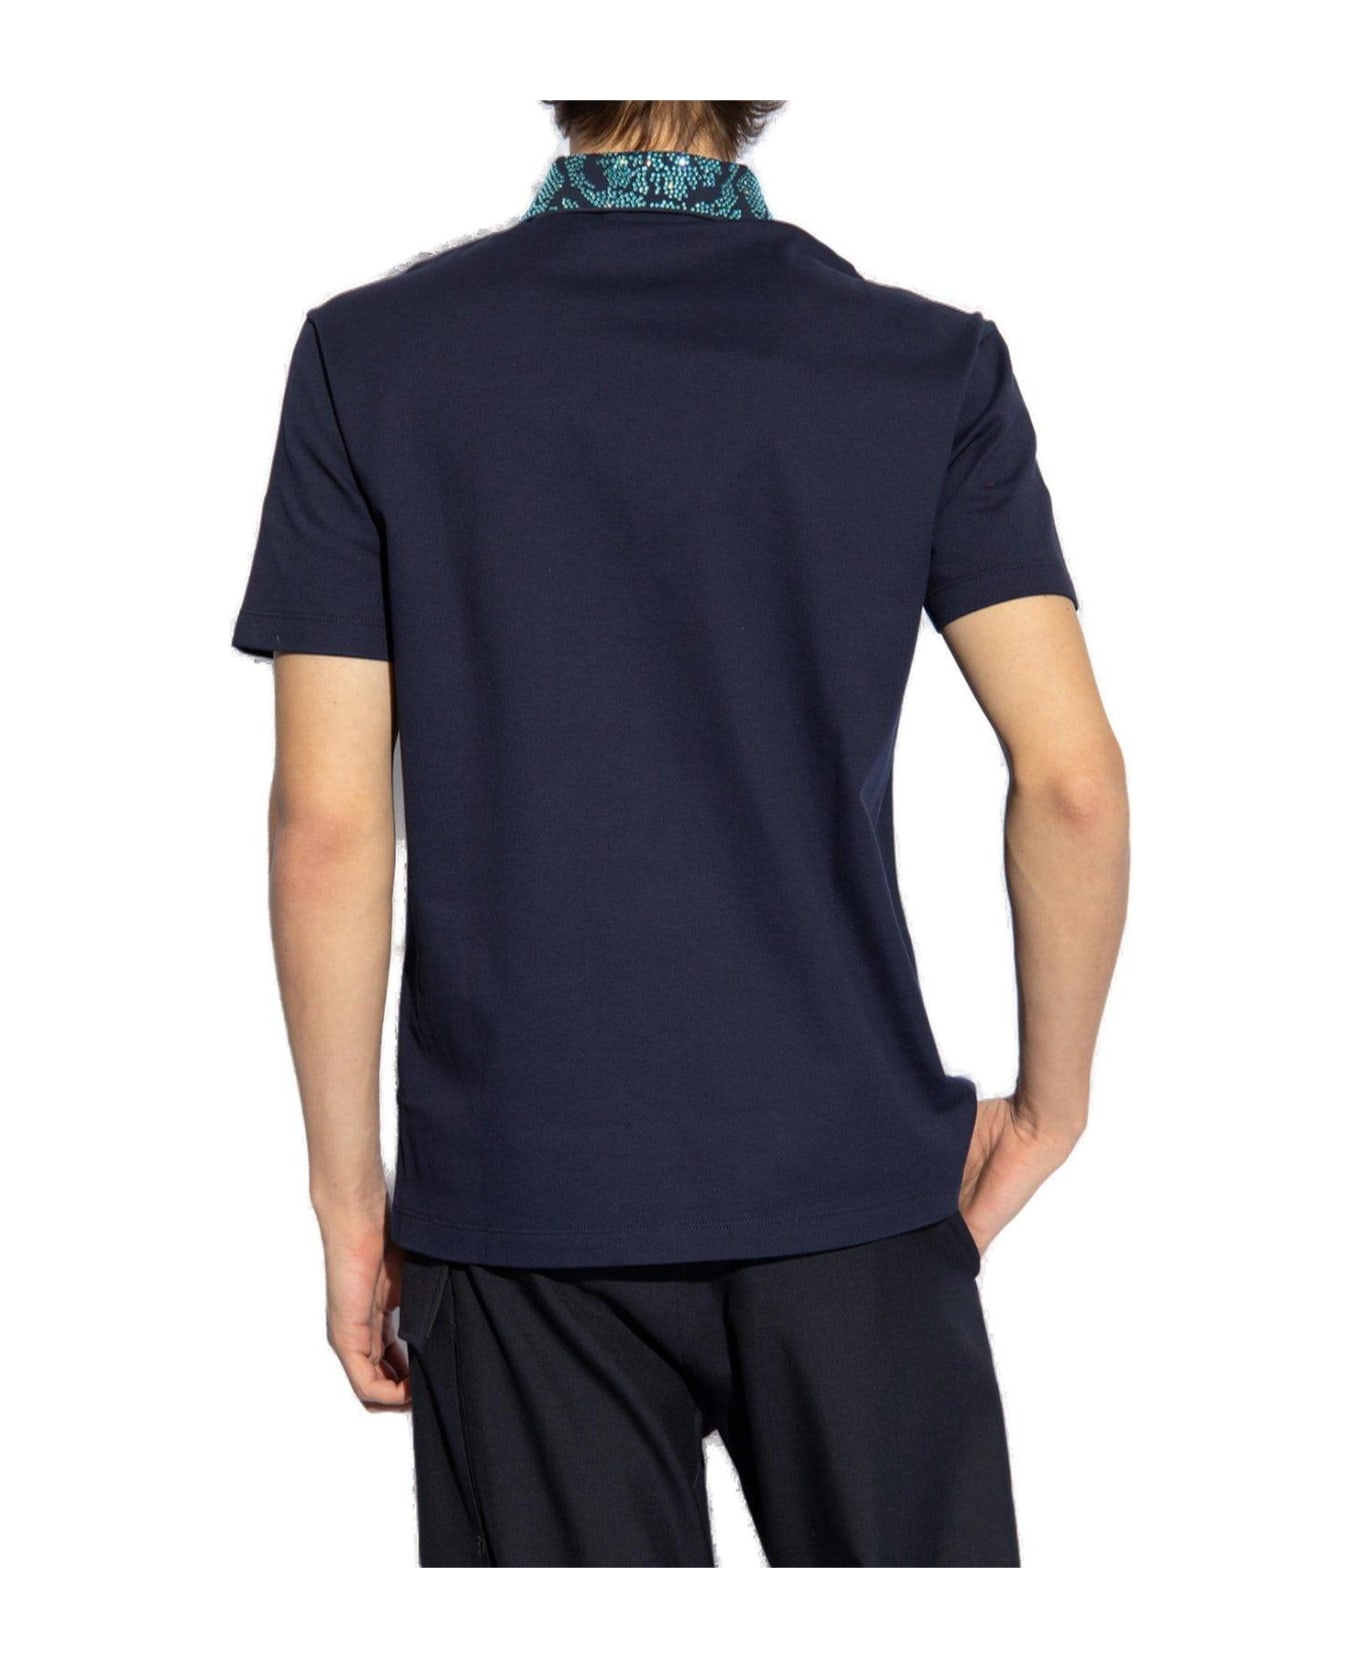 Versace Glass Embellished Short-sleeved Polo Shirt - BLUE